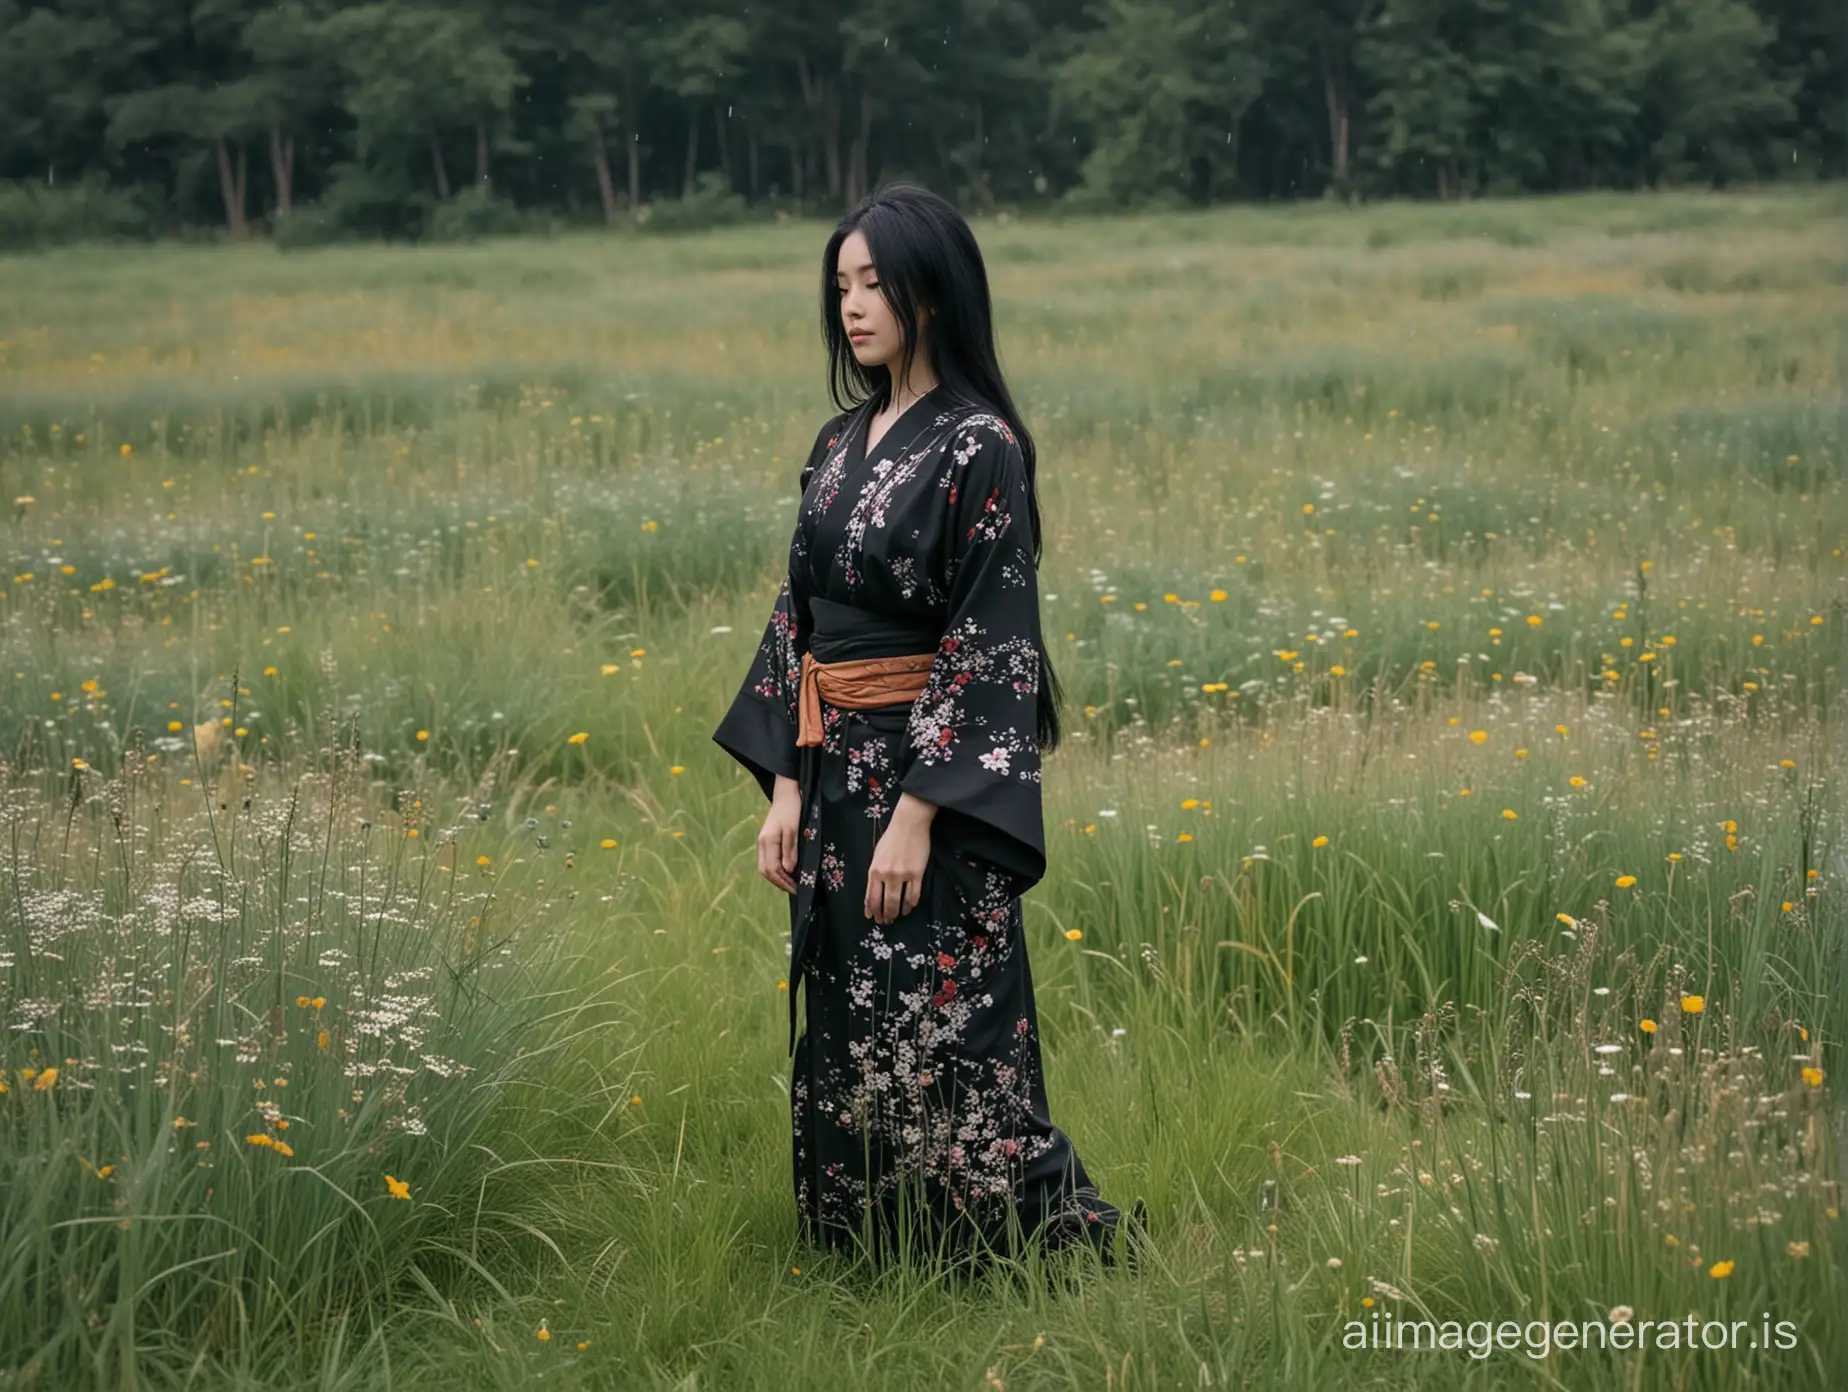 Black kimono, long black hair, Meadow, overcast